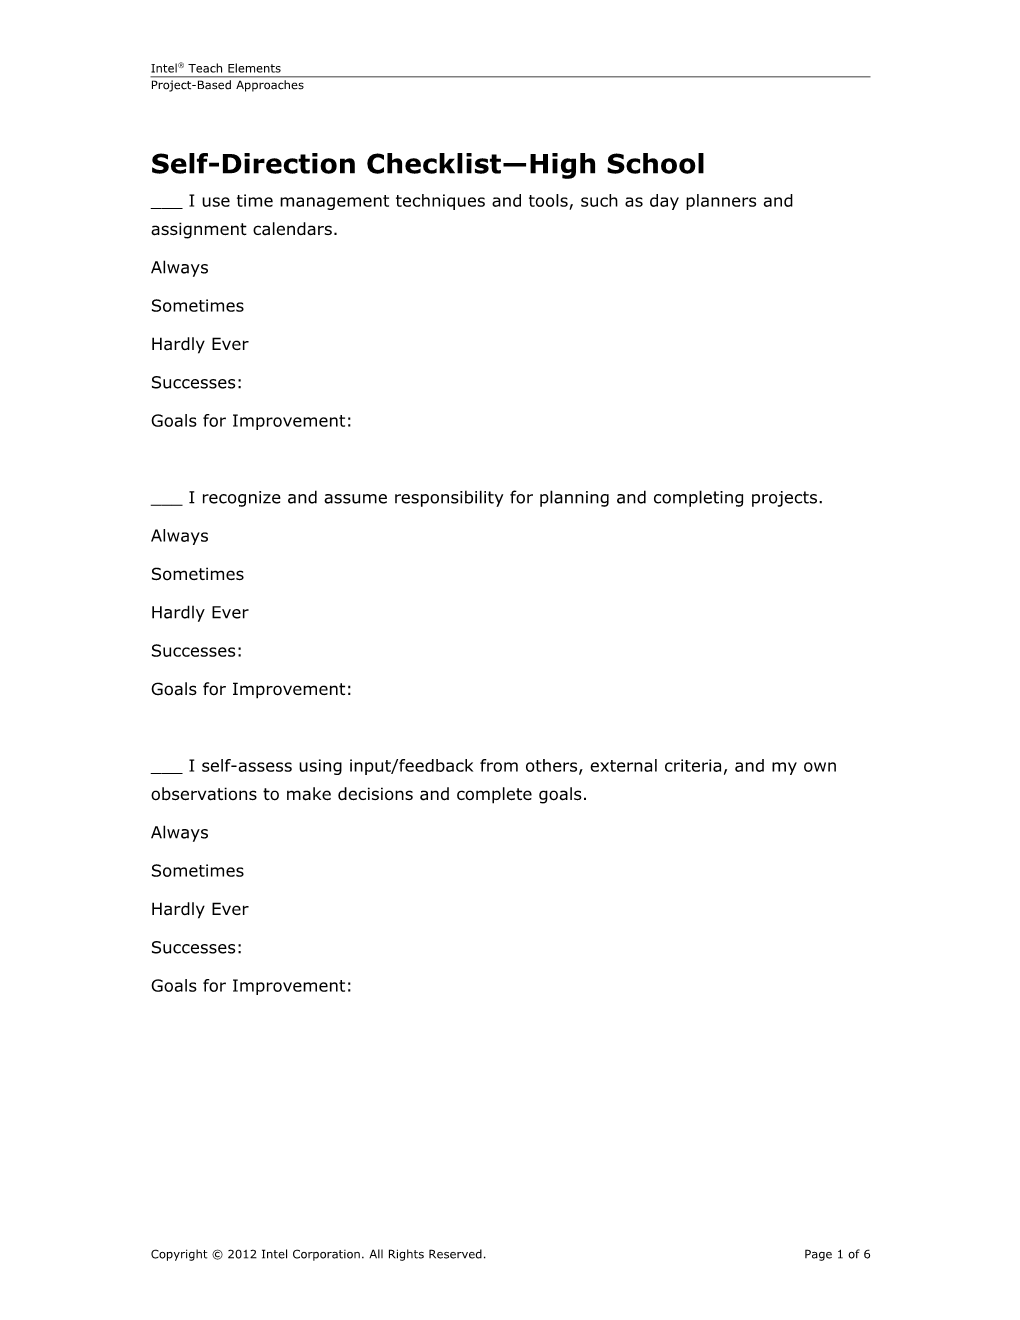 Self-Direction Checklist High School